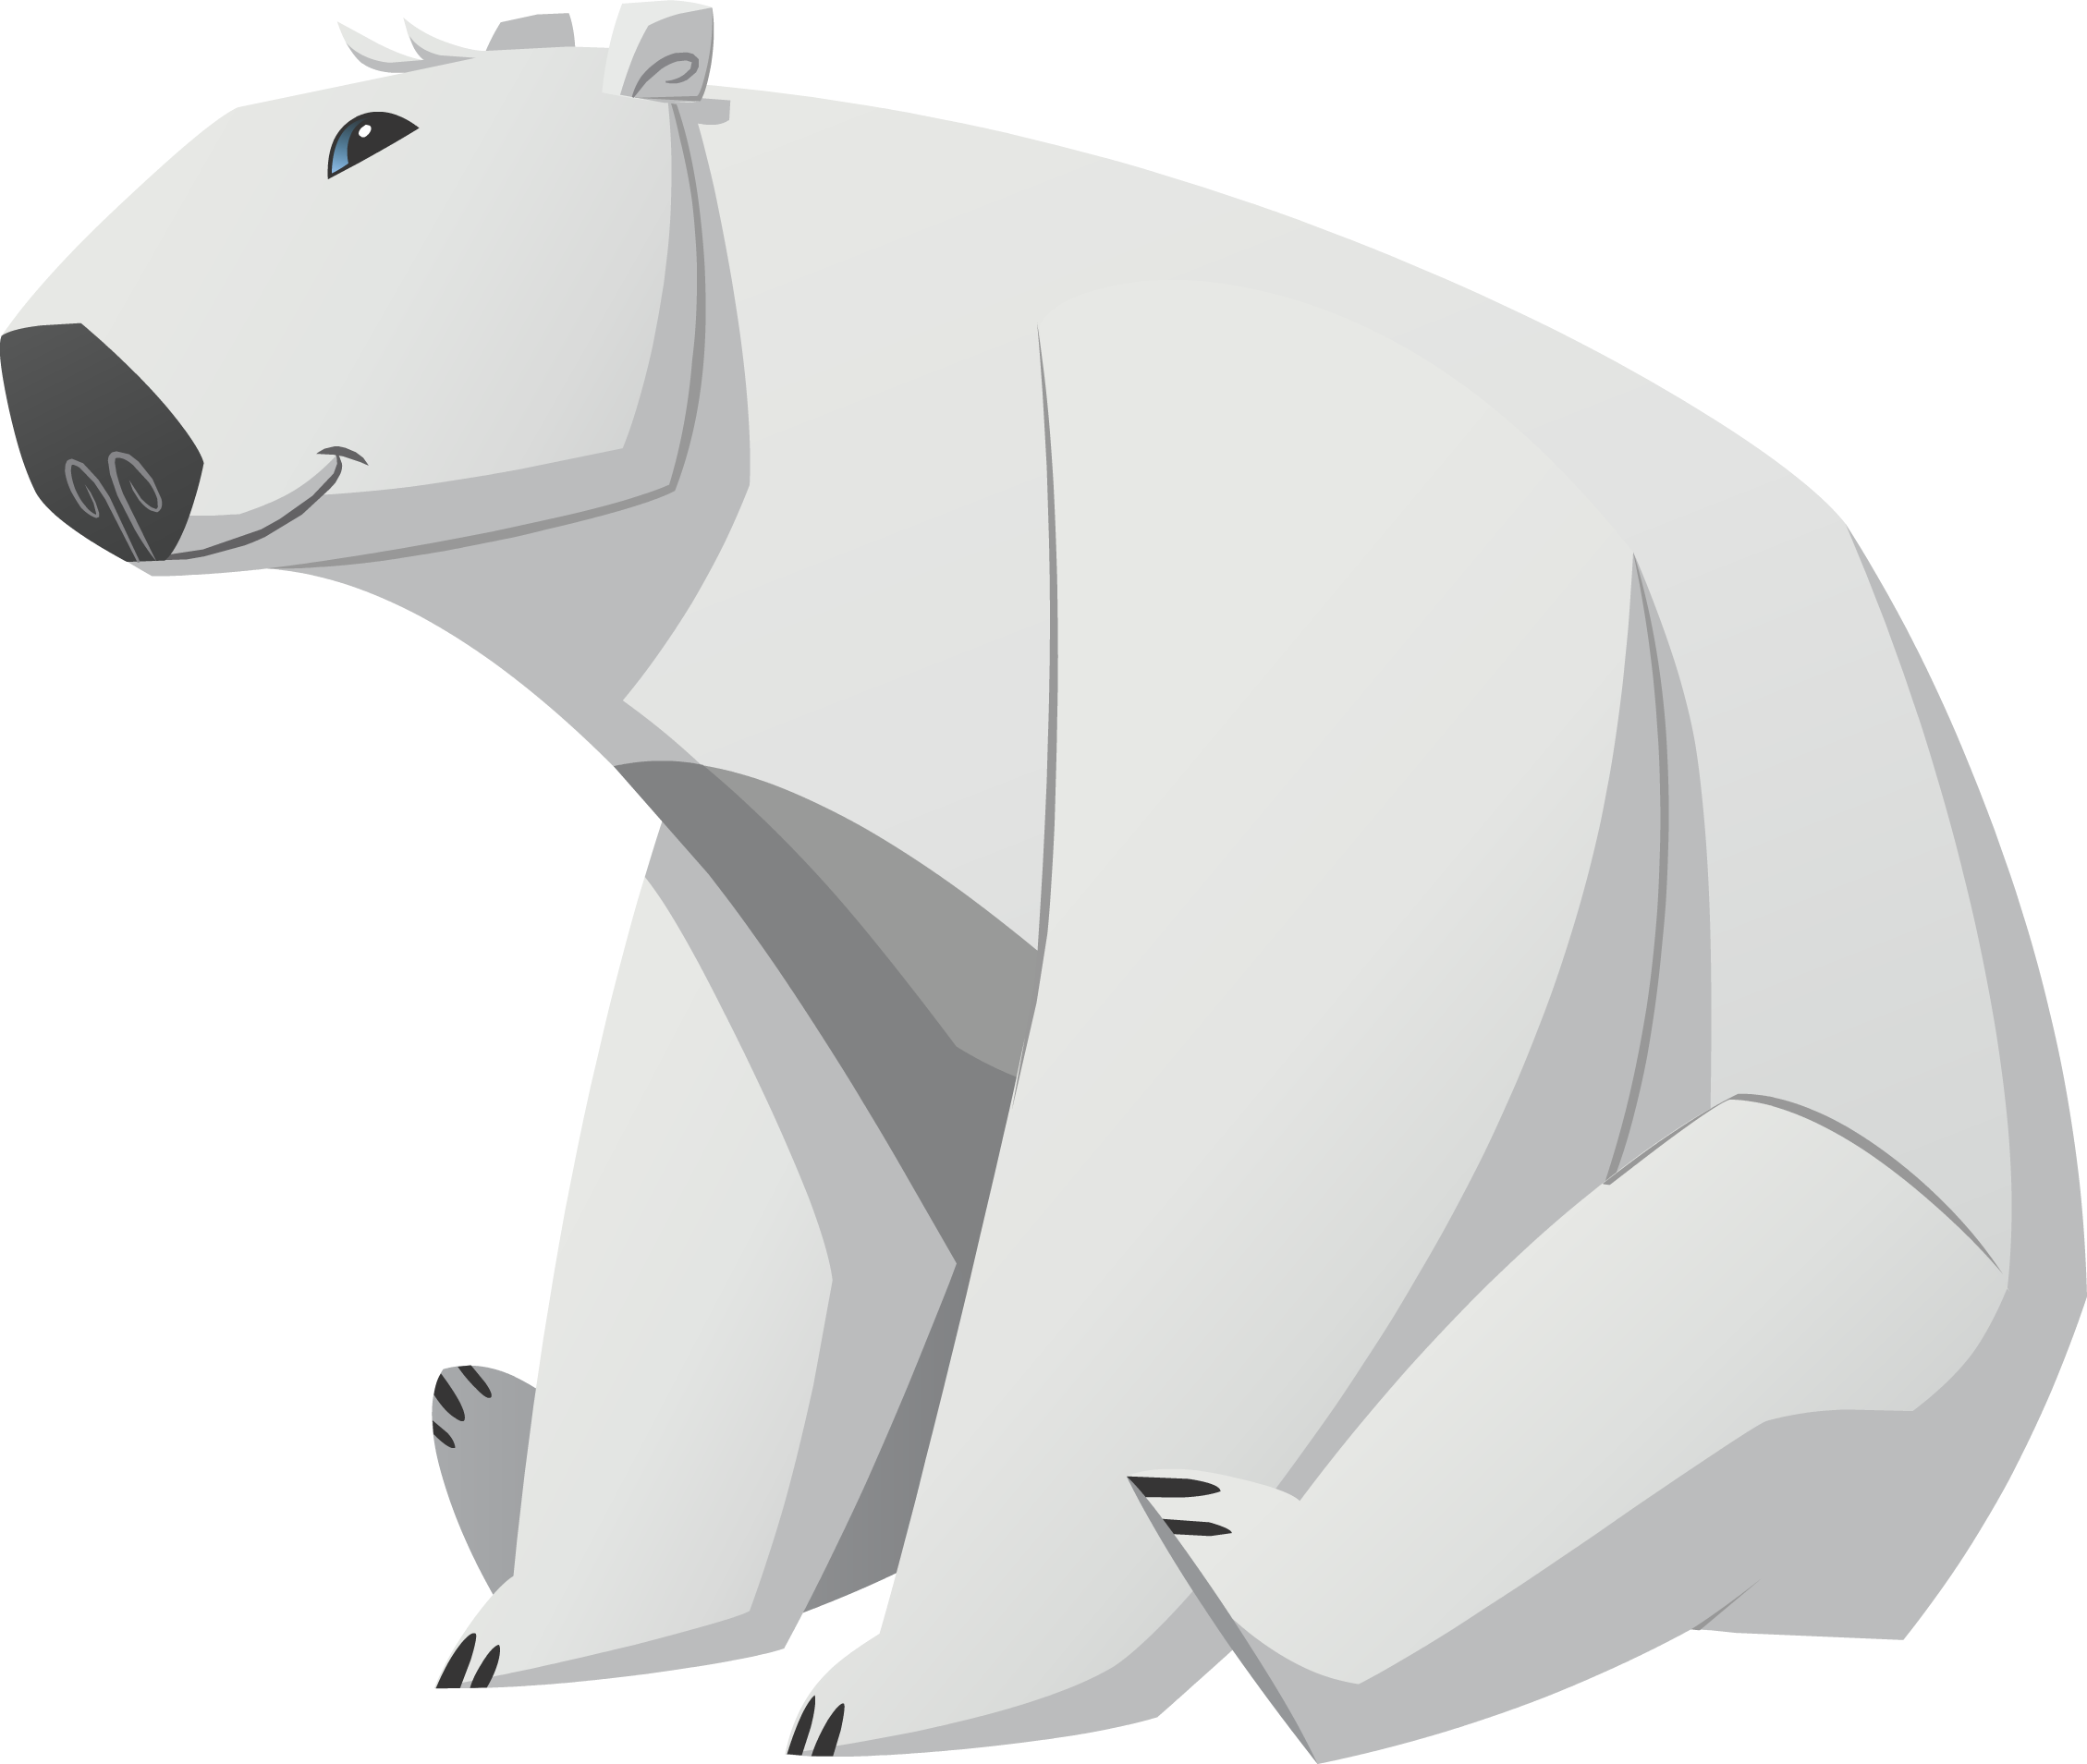 Yüzünü kaplayan kutup ayısı